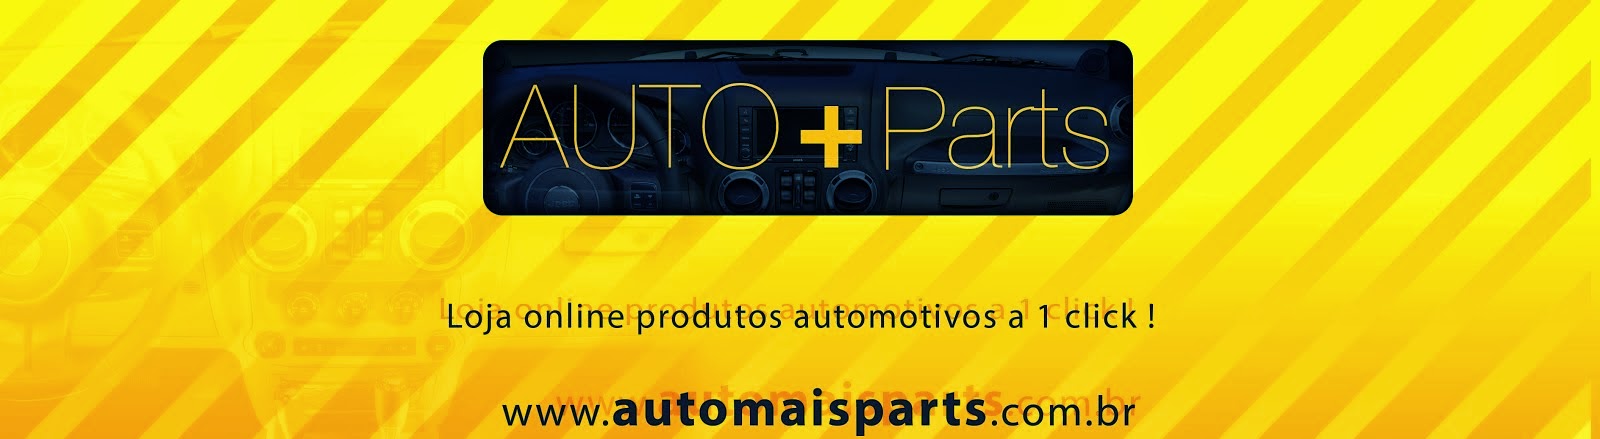 Auto+Parts